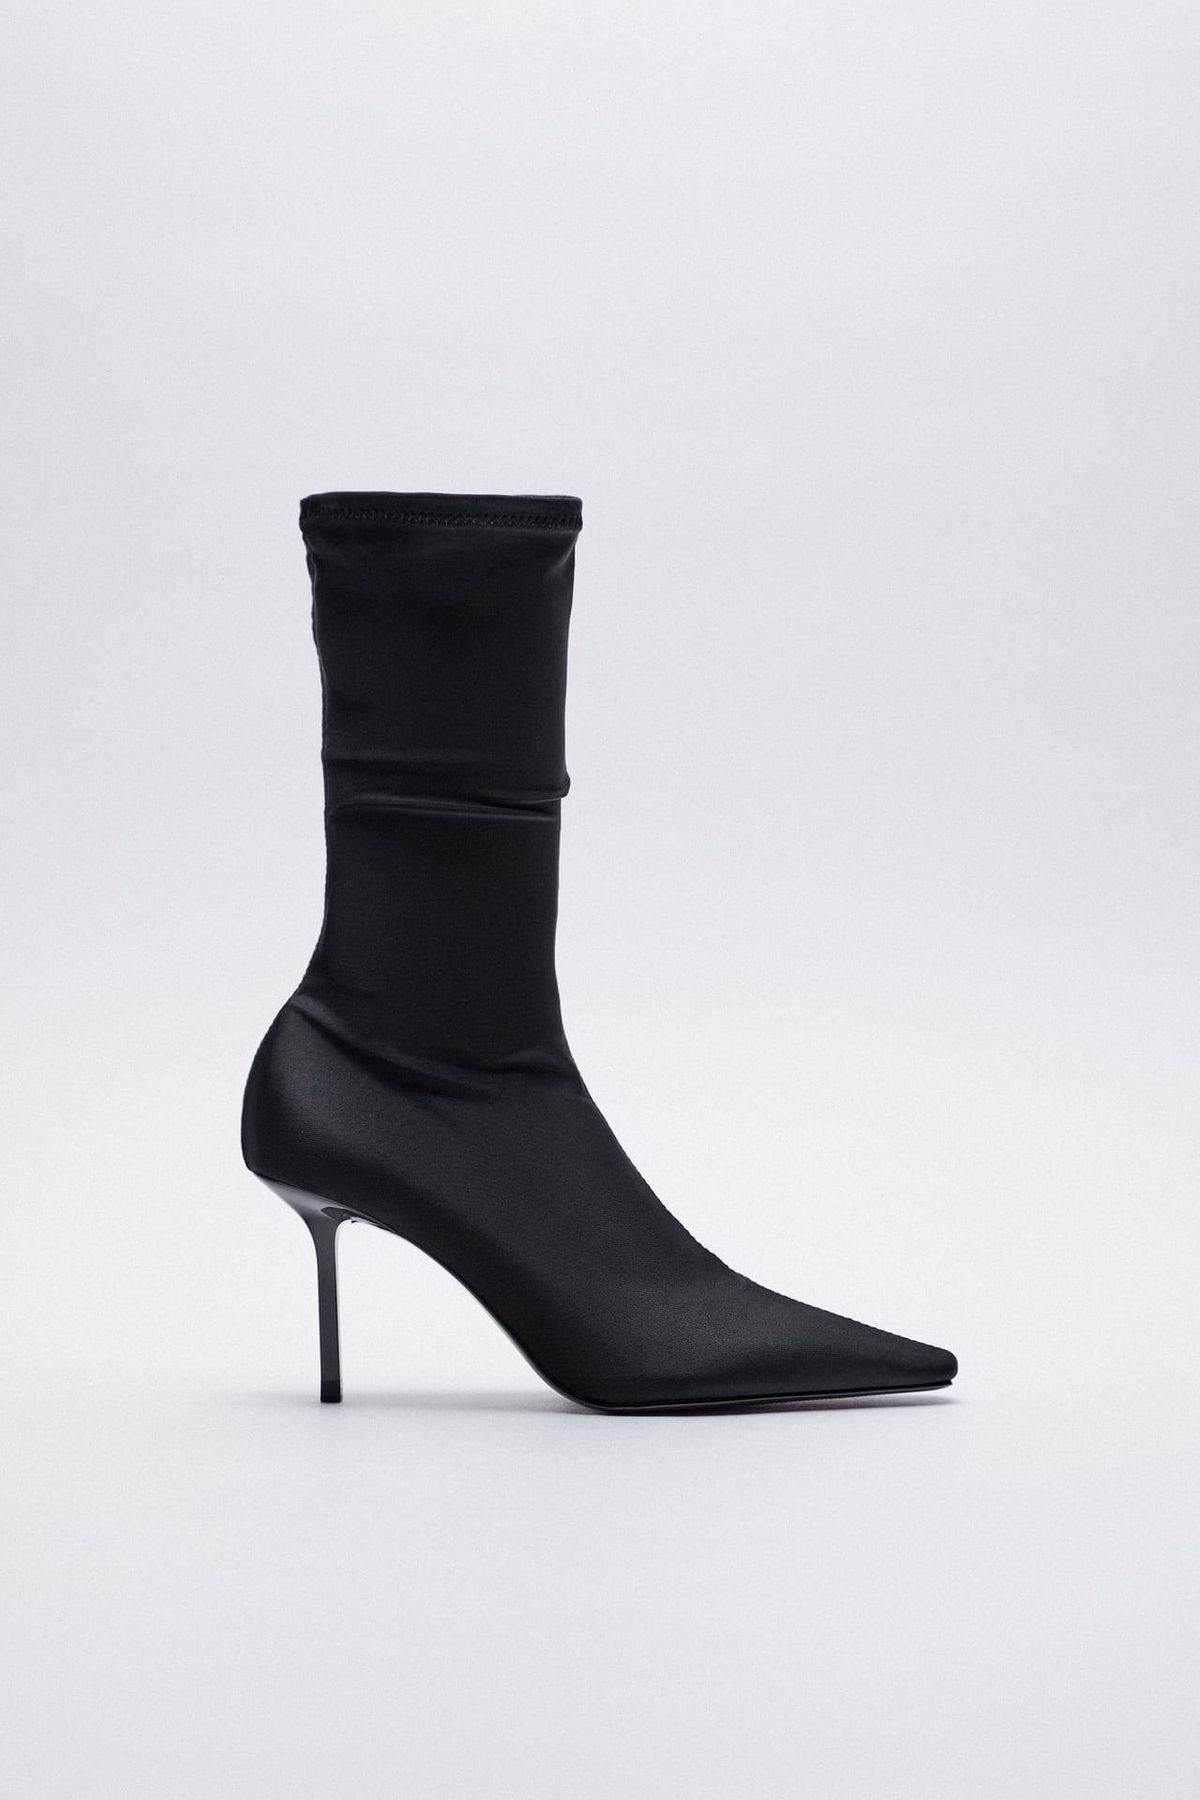 zara sock style fabric high heel ankle boots